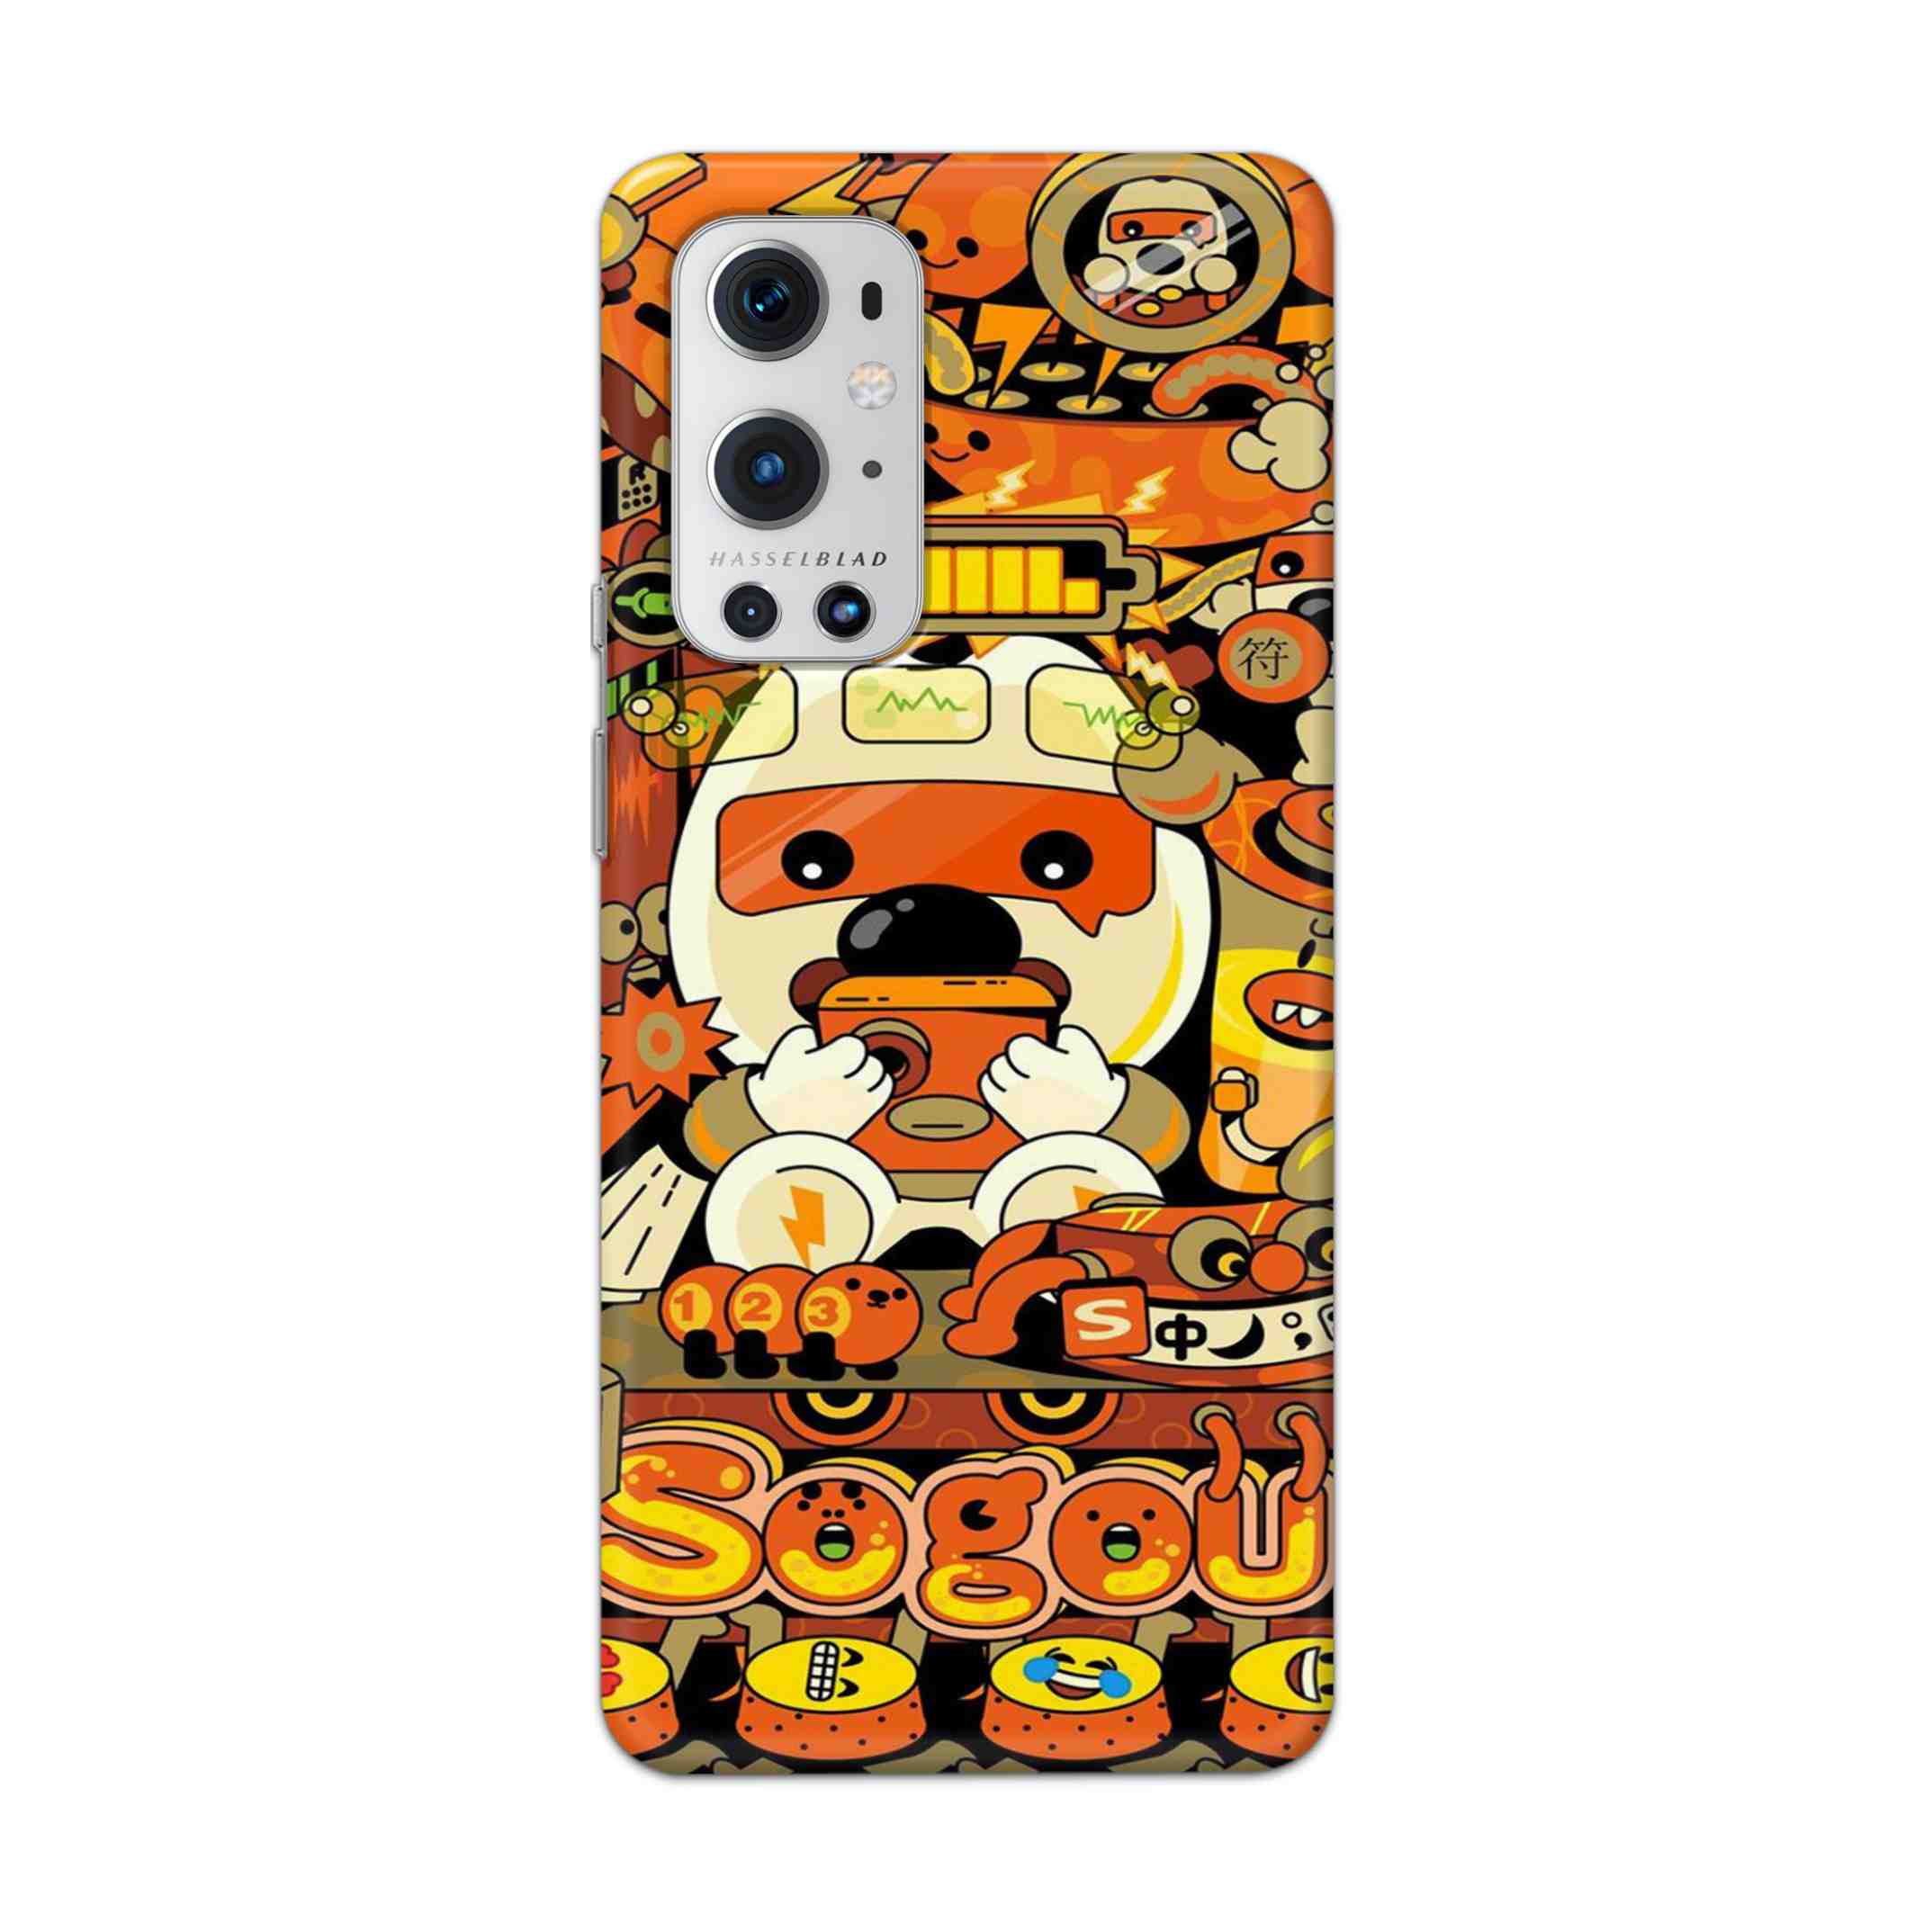 Buy Sogou Hard Back Mobile Phone Case Cover For OnePlus 9 Pro Online